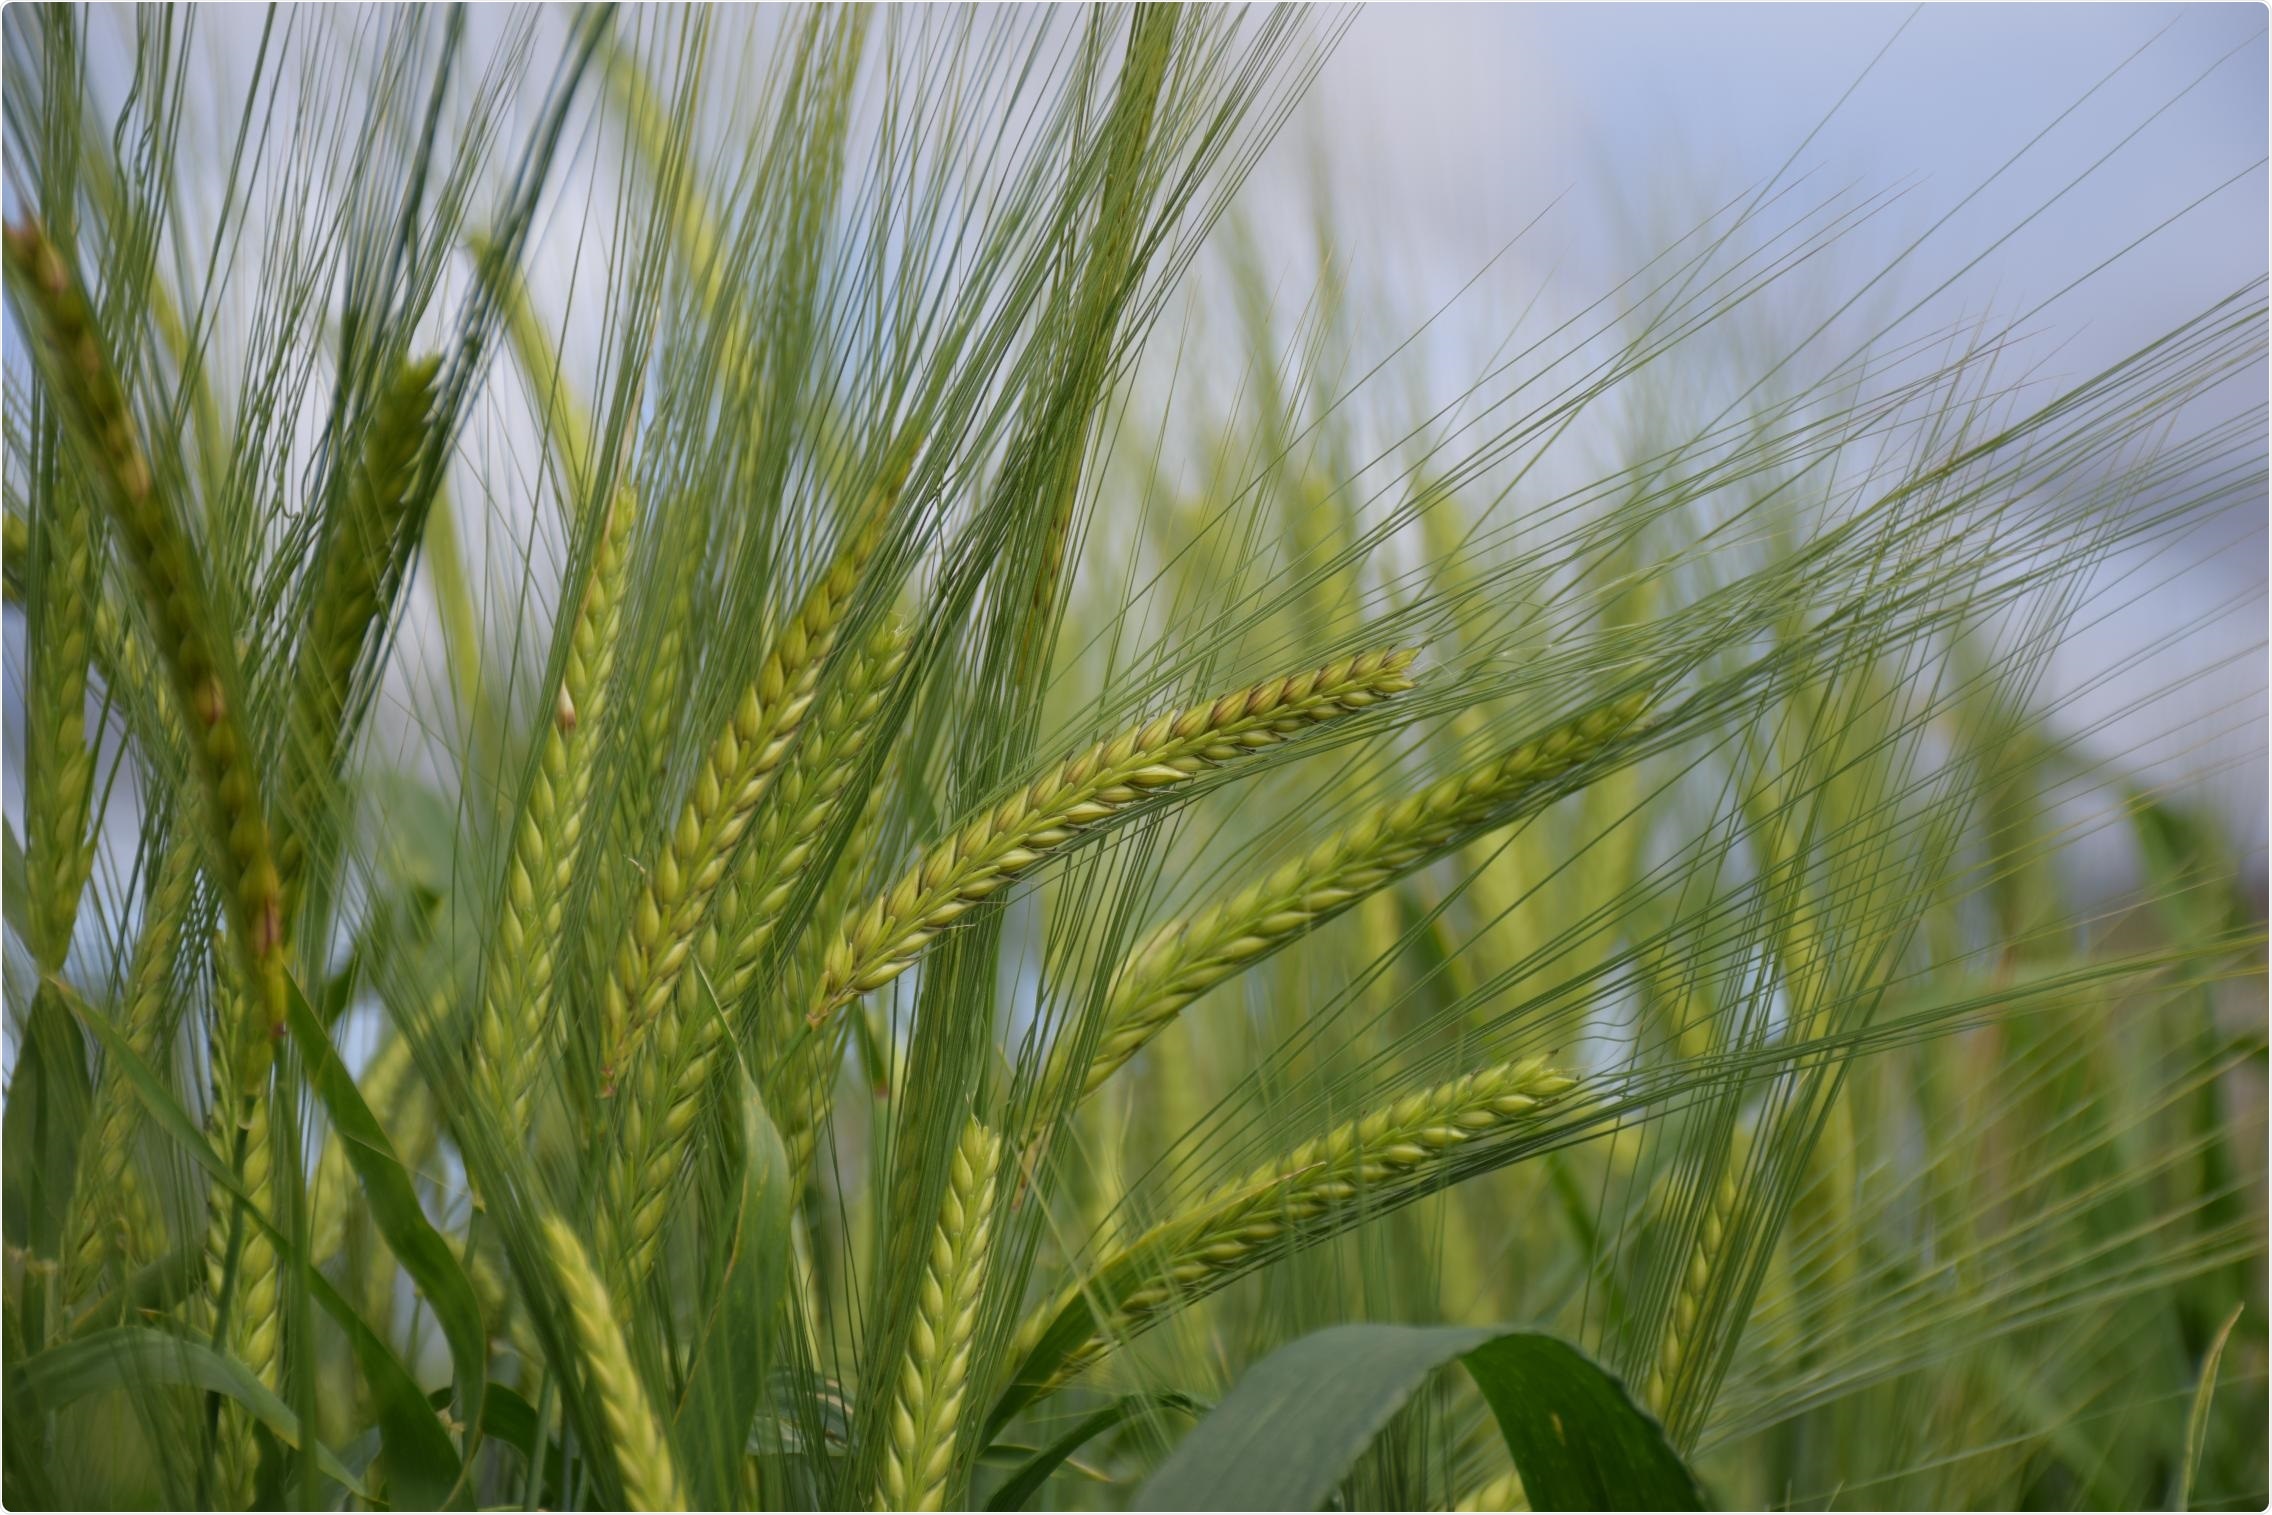 CRISPR technique can improve the quality of barley grain